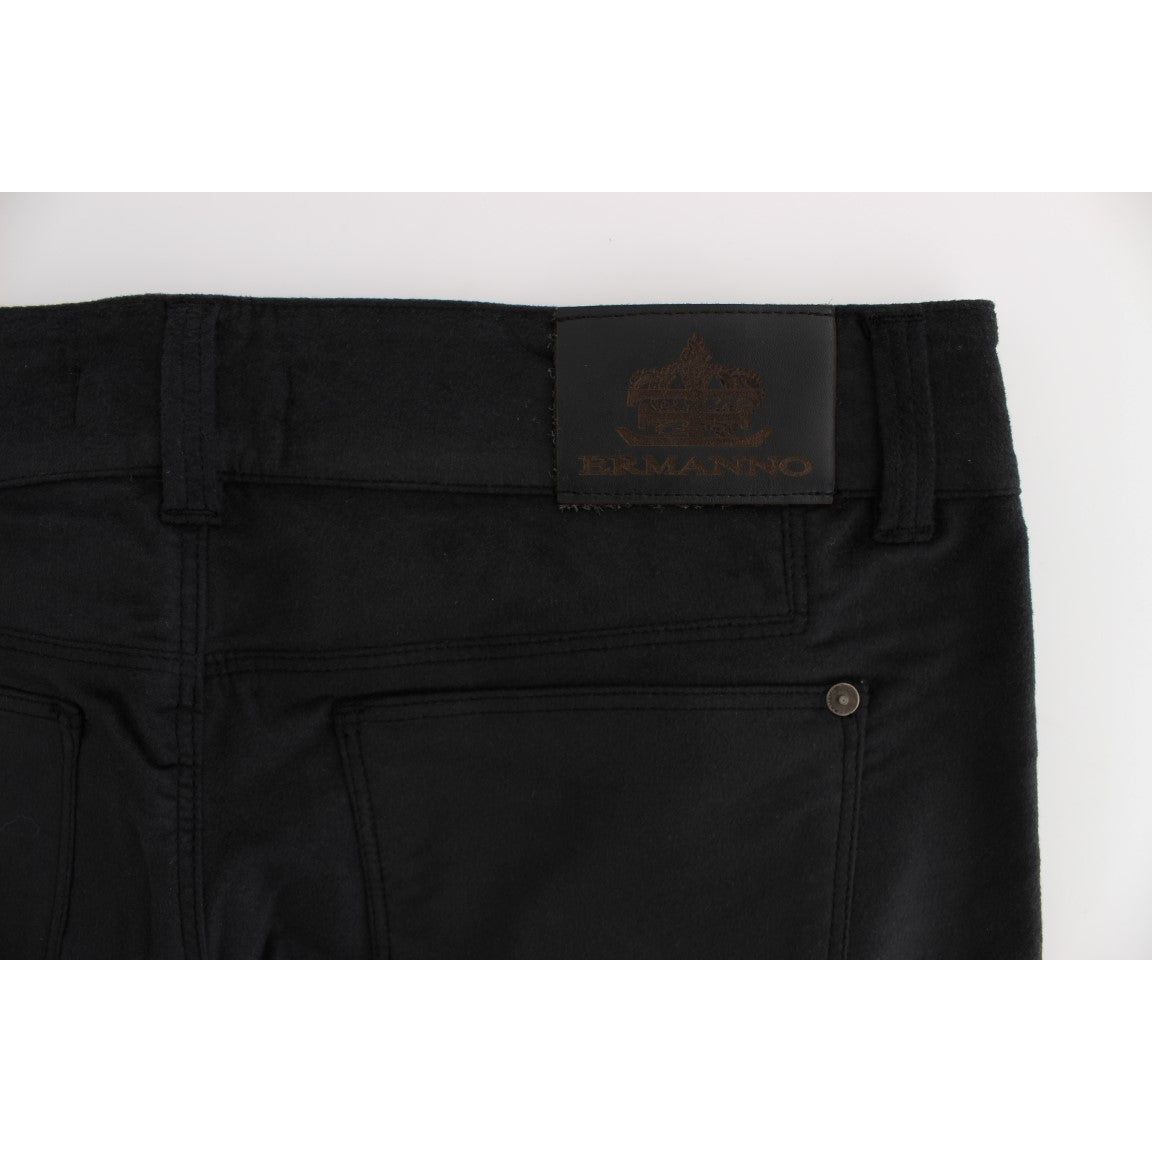 Ermanno Scervino Chic Black Regular Fit Trousers black-cotton-blend-regular-fit-pants Jeans & Pants 330636-black-cotton-blend-regular-fit-pants-8.jpg